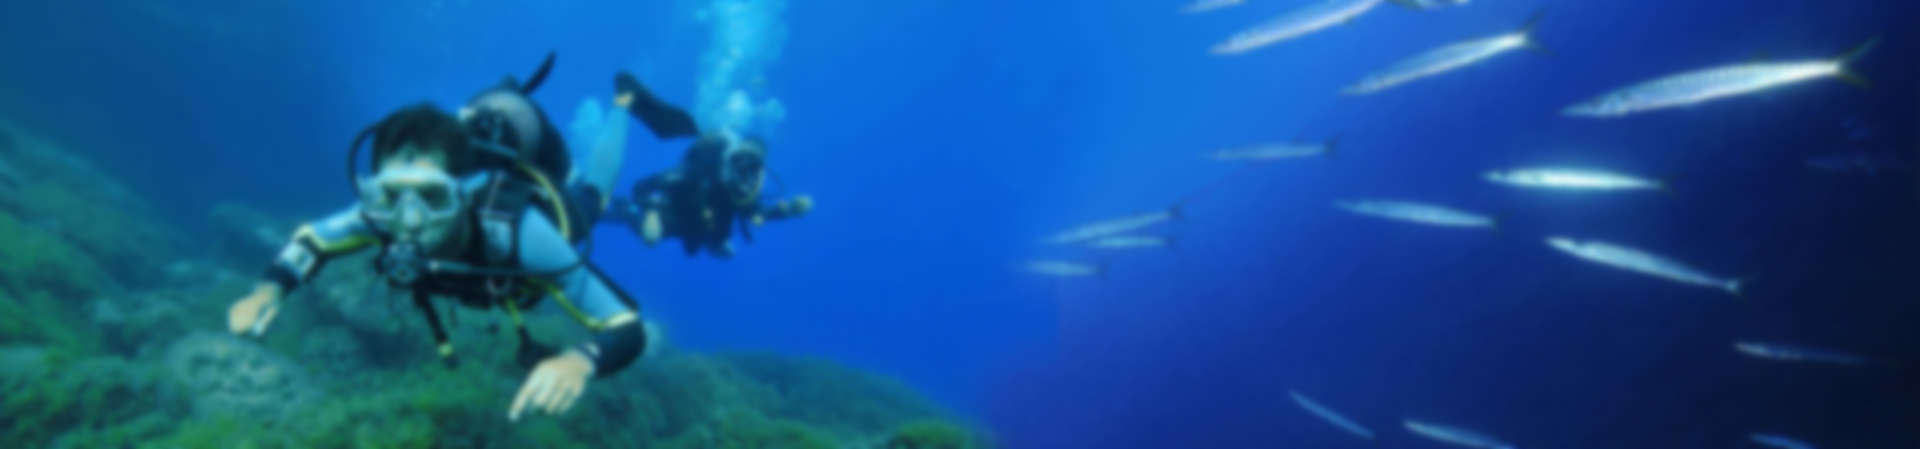 Fotografia subacquea